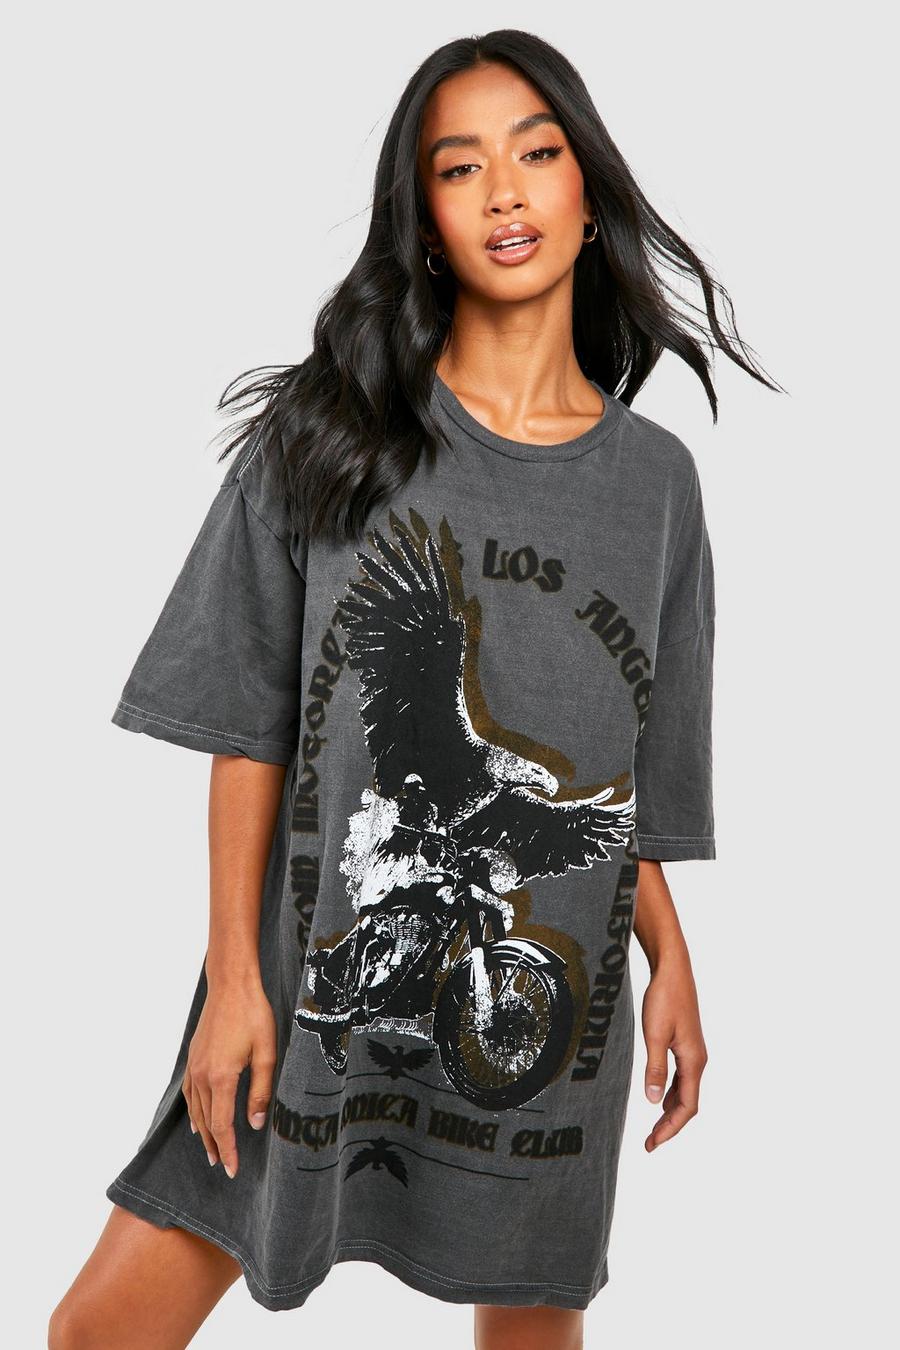 Charcoal grey Petite Motorcycle Slogan Oversized Washed Tshirt Dress